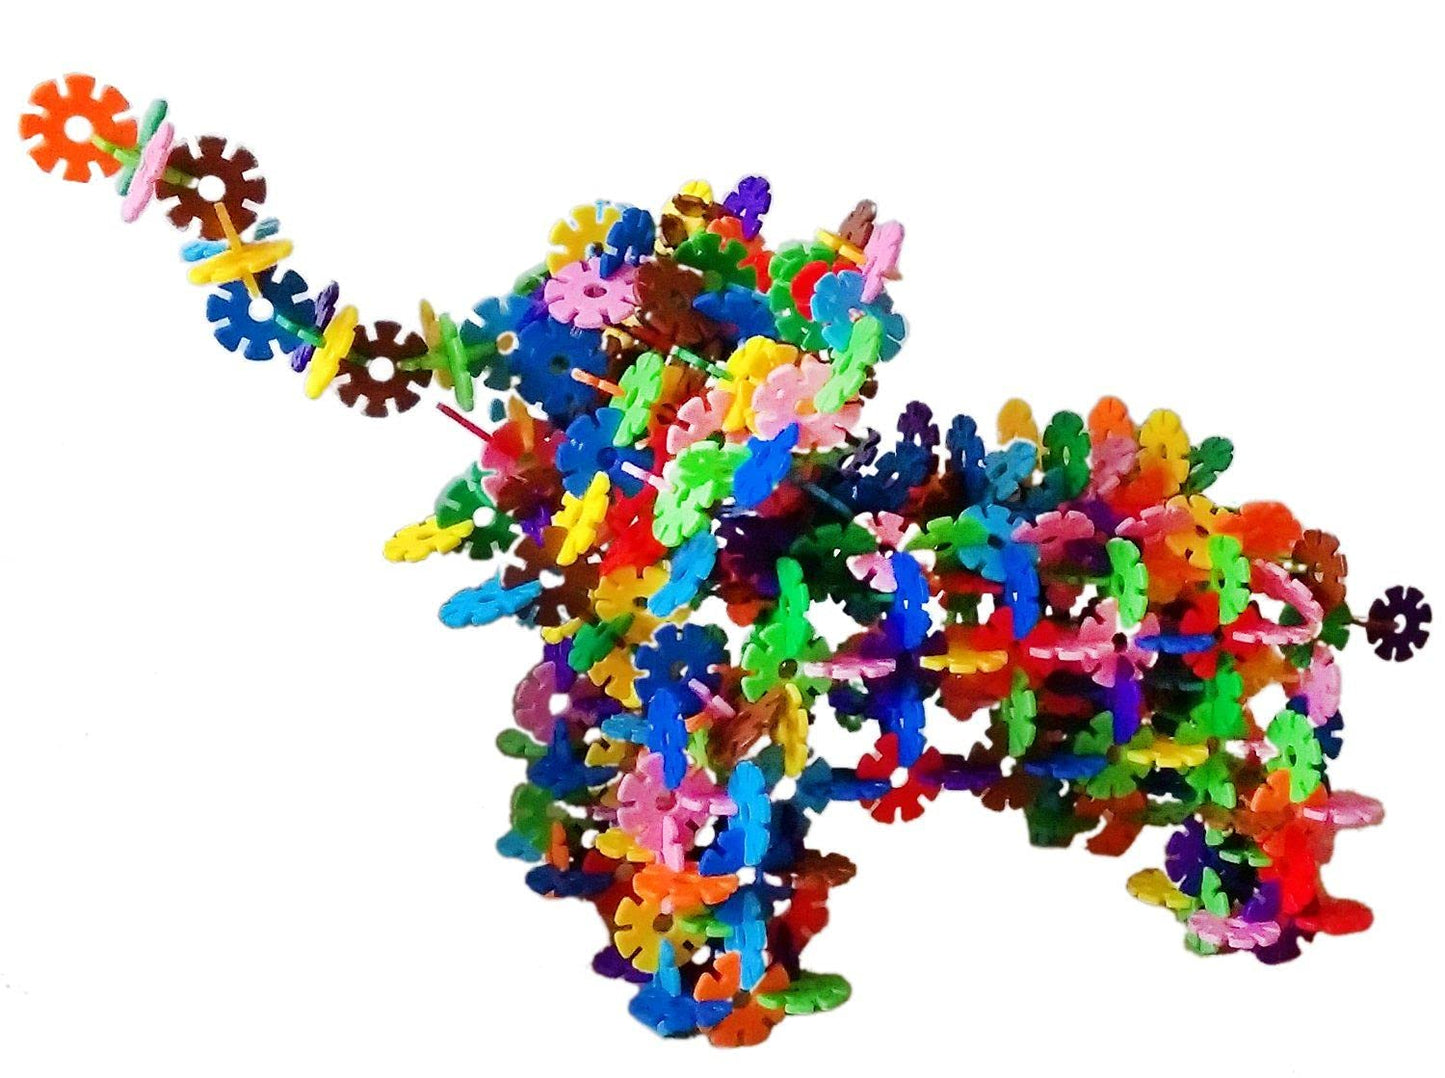 AZi® Snowflake Multicolor Building Blocks Set 100 Pc - Colorful Interlocking Stack-able Children's Building Block Kit - Variety | Kids Educational Toys Set of Plastic Building Stems